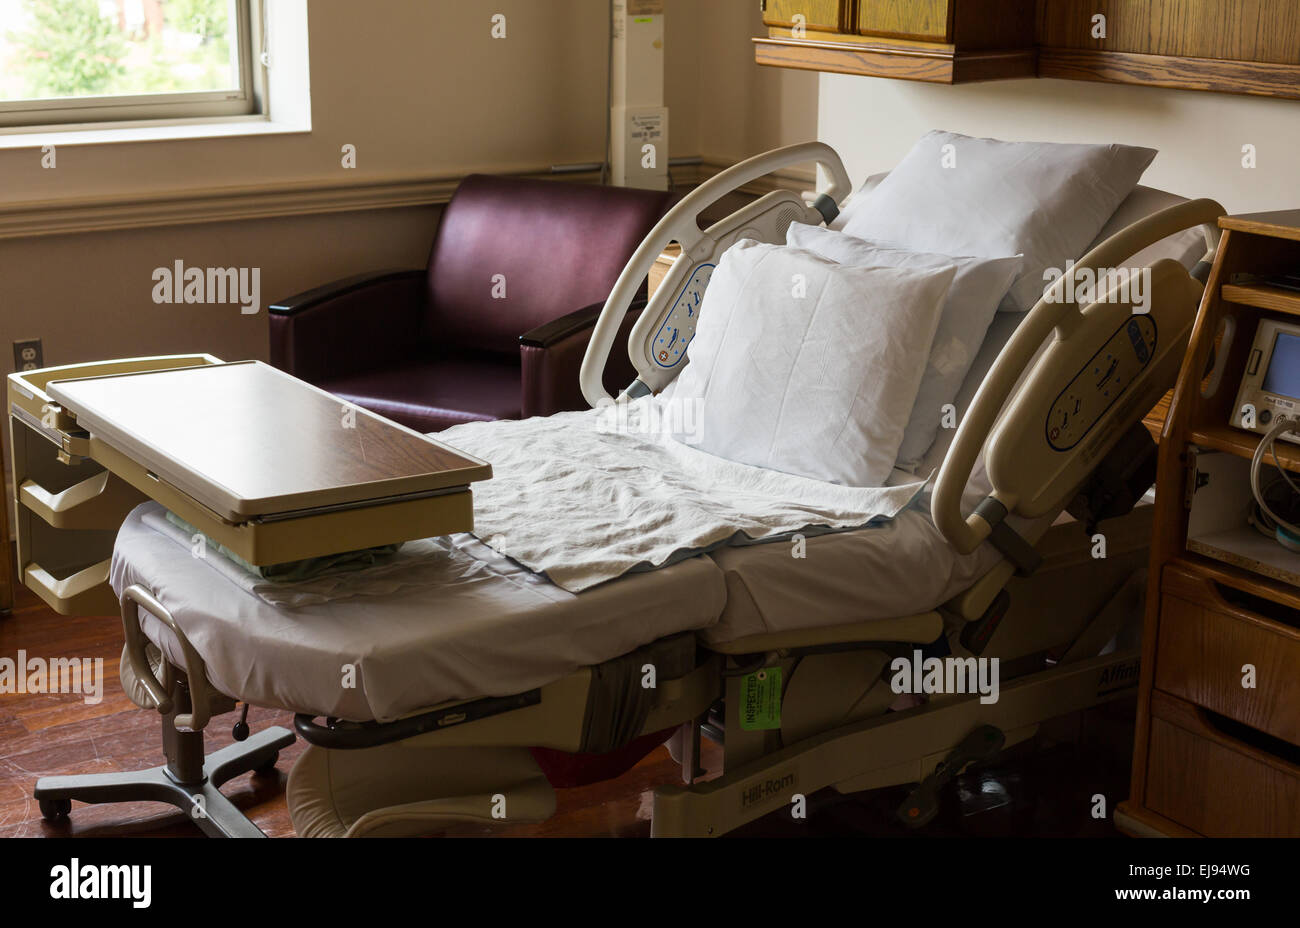 Hospital bed in maternity ward Stock Photo